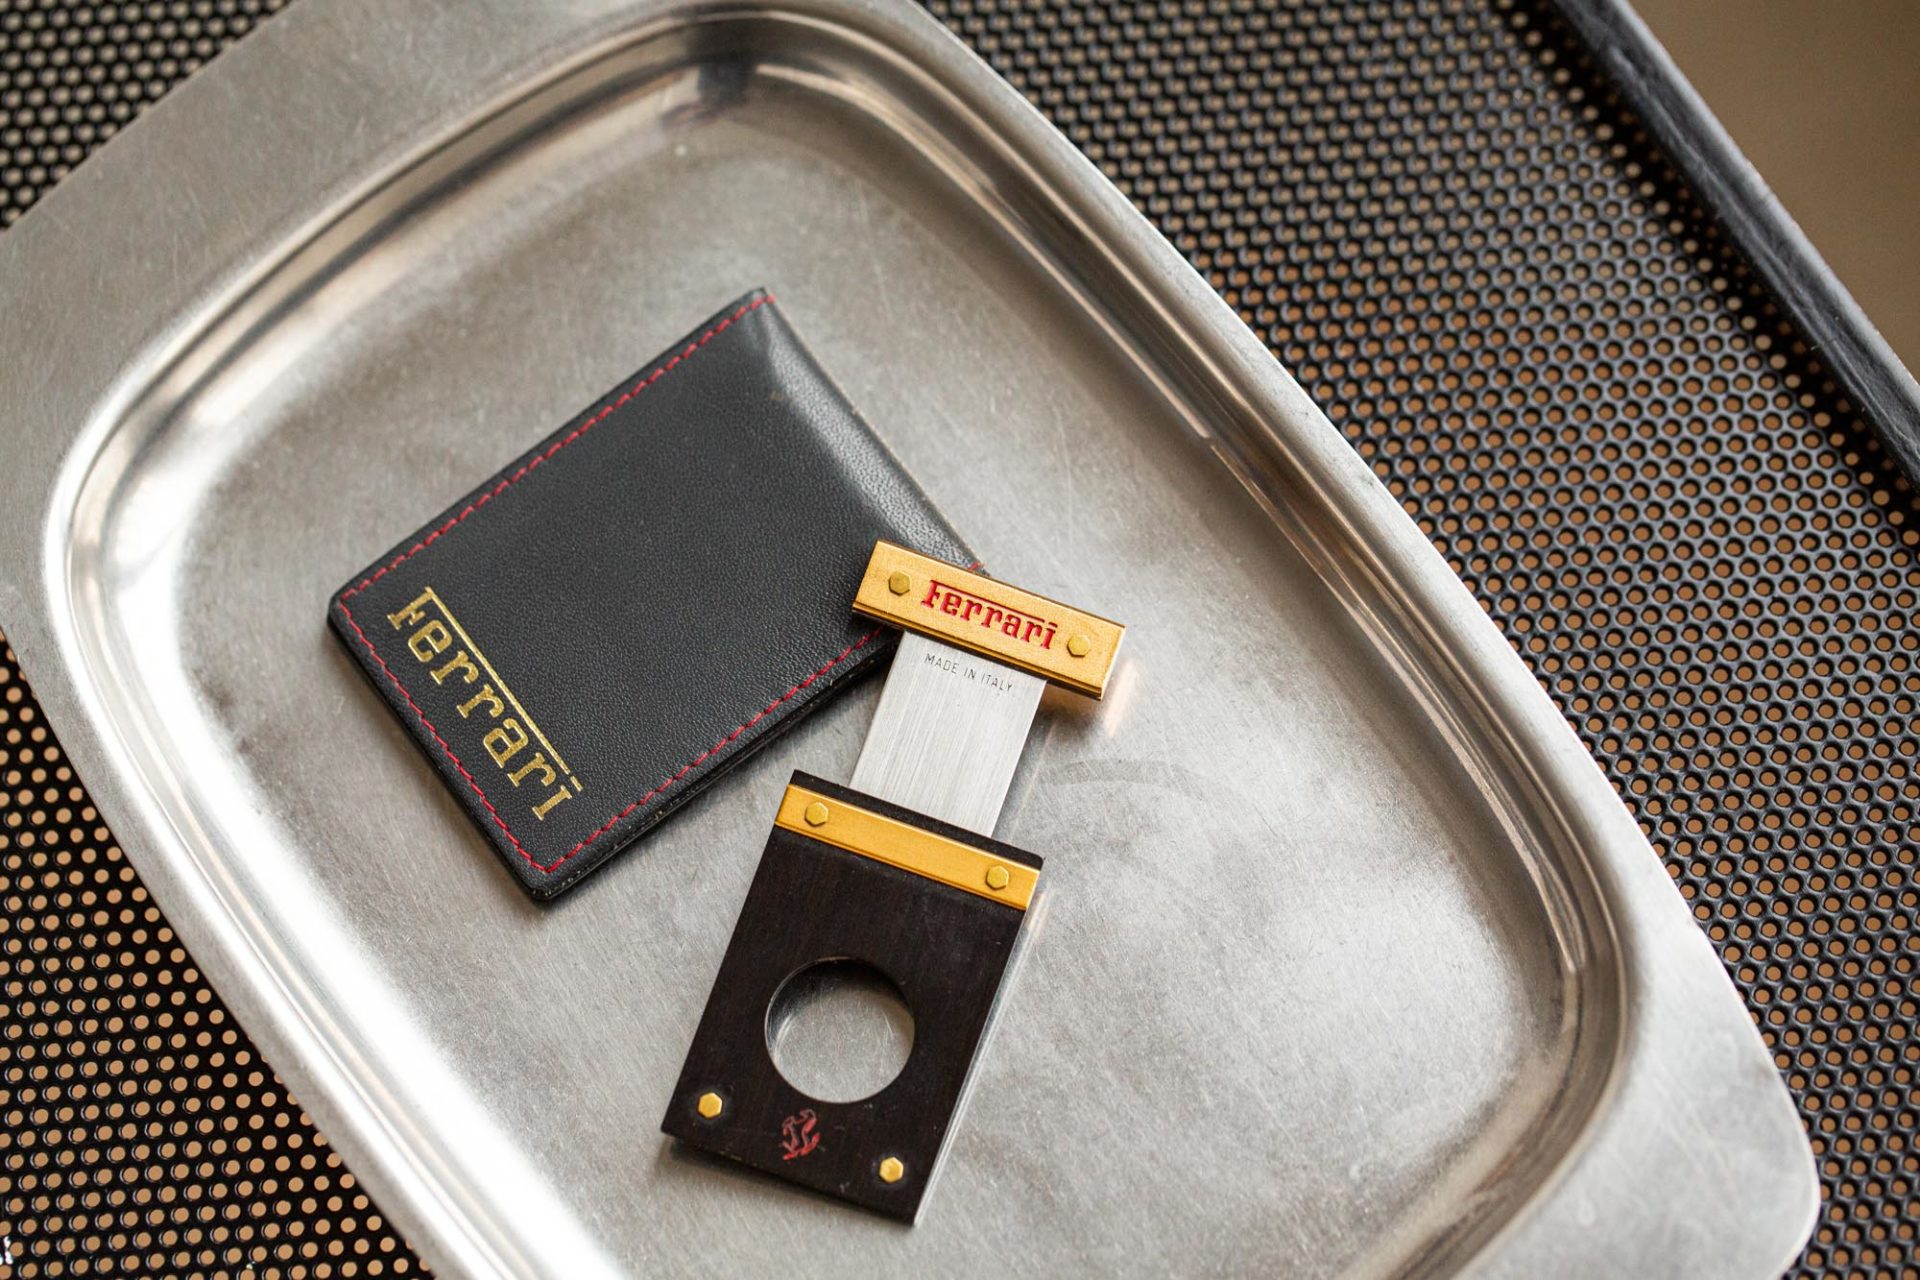 Ferrari - Coupe cigare - Les objets Joseph Bonnie